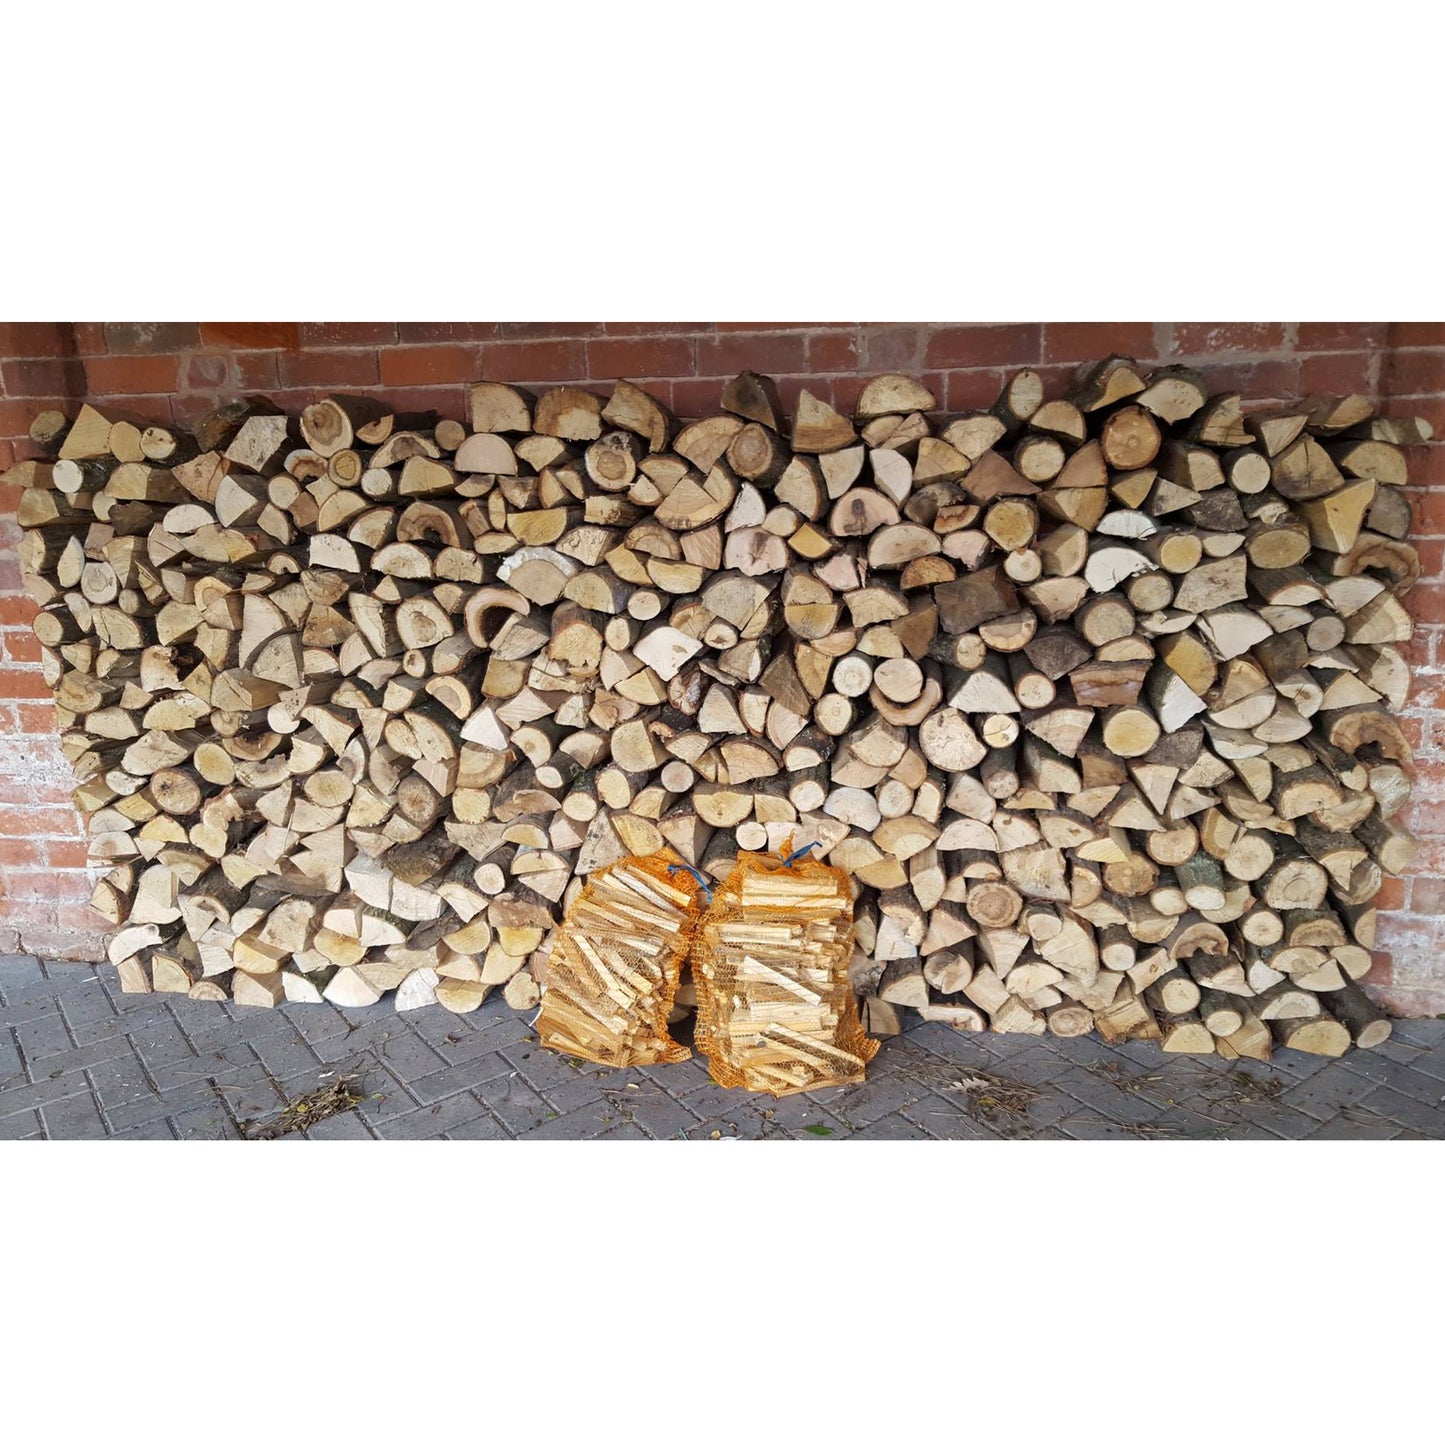 Bulk Bag – Kiln Dried Mixed Hardwood Logs